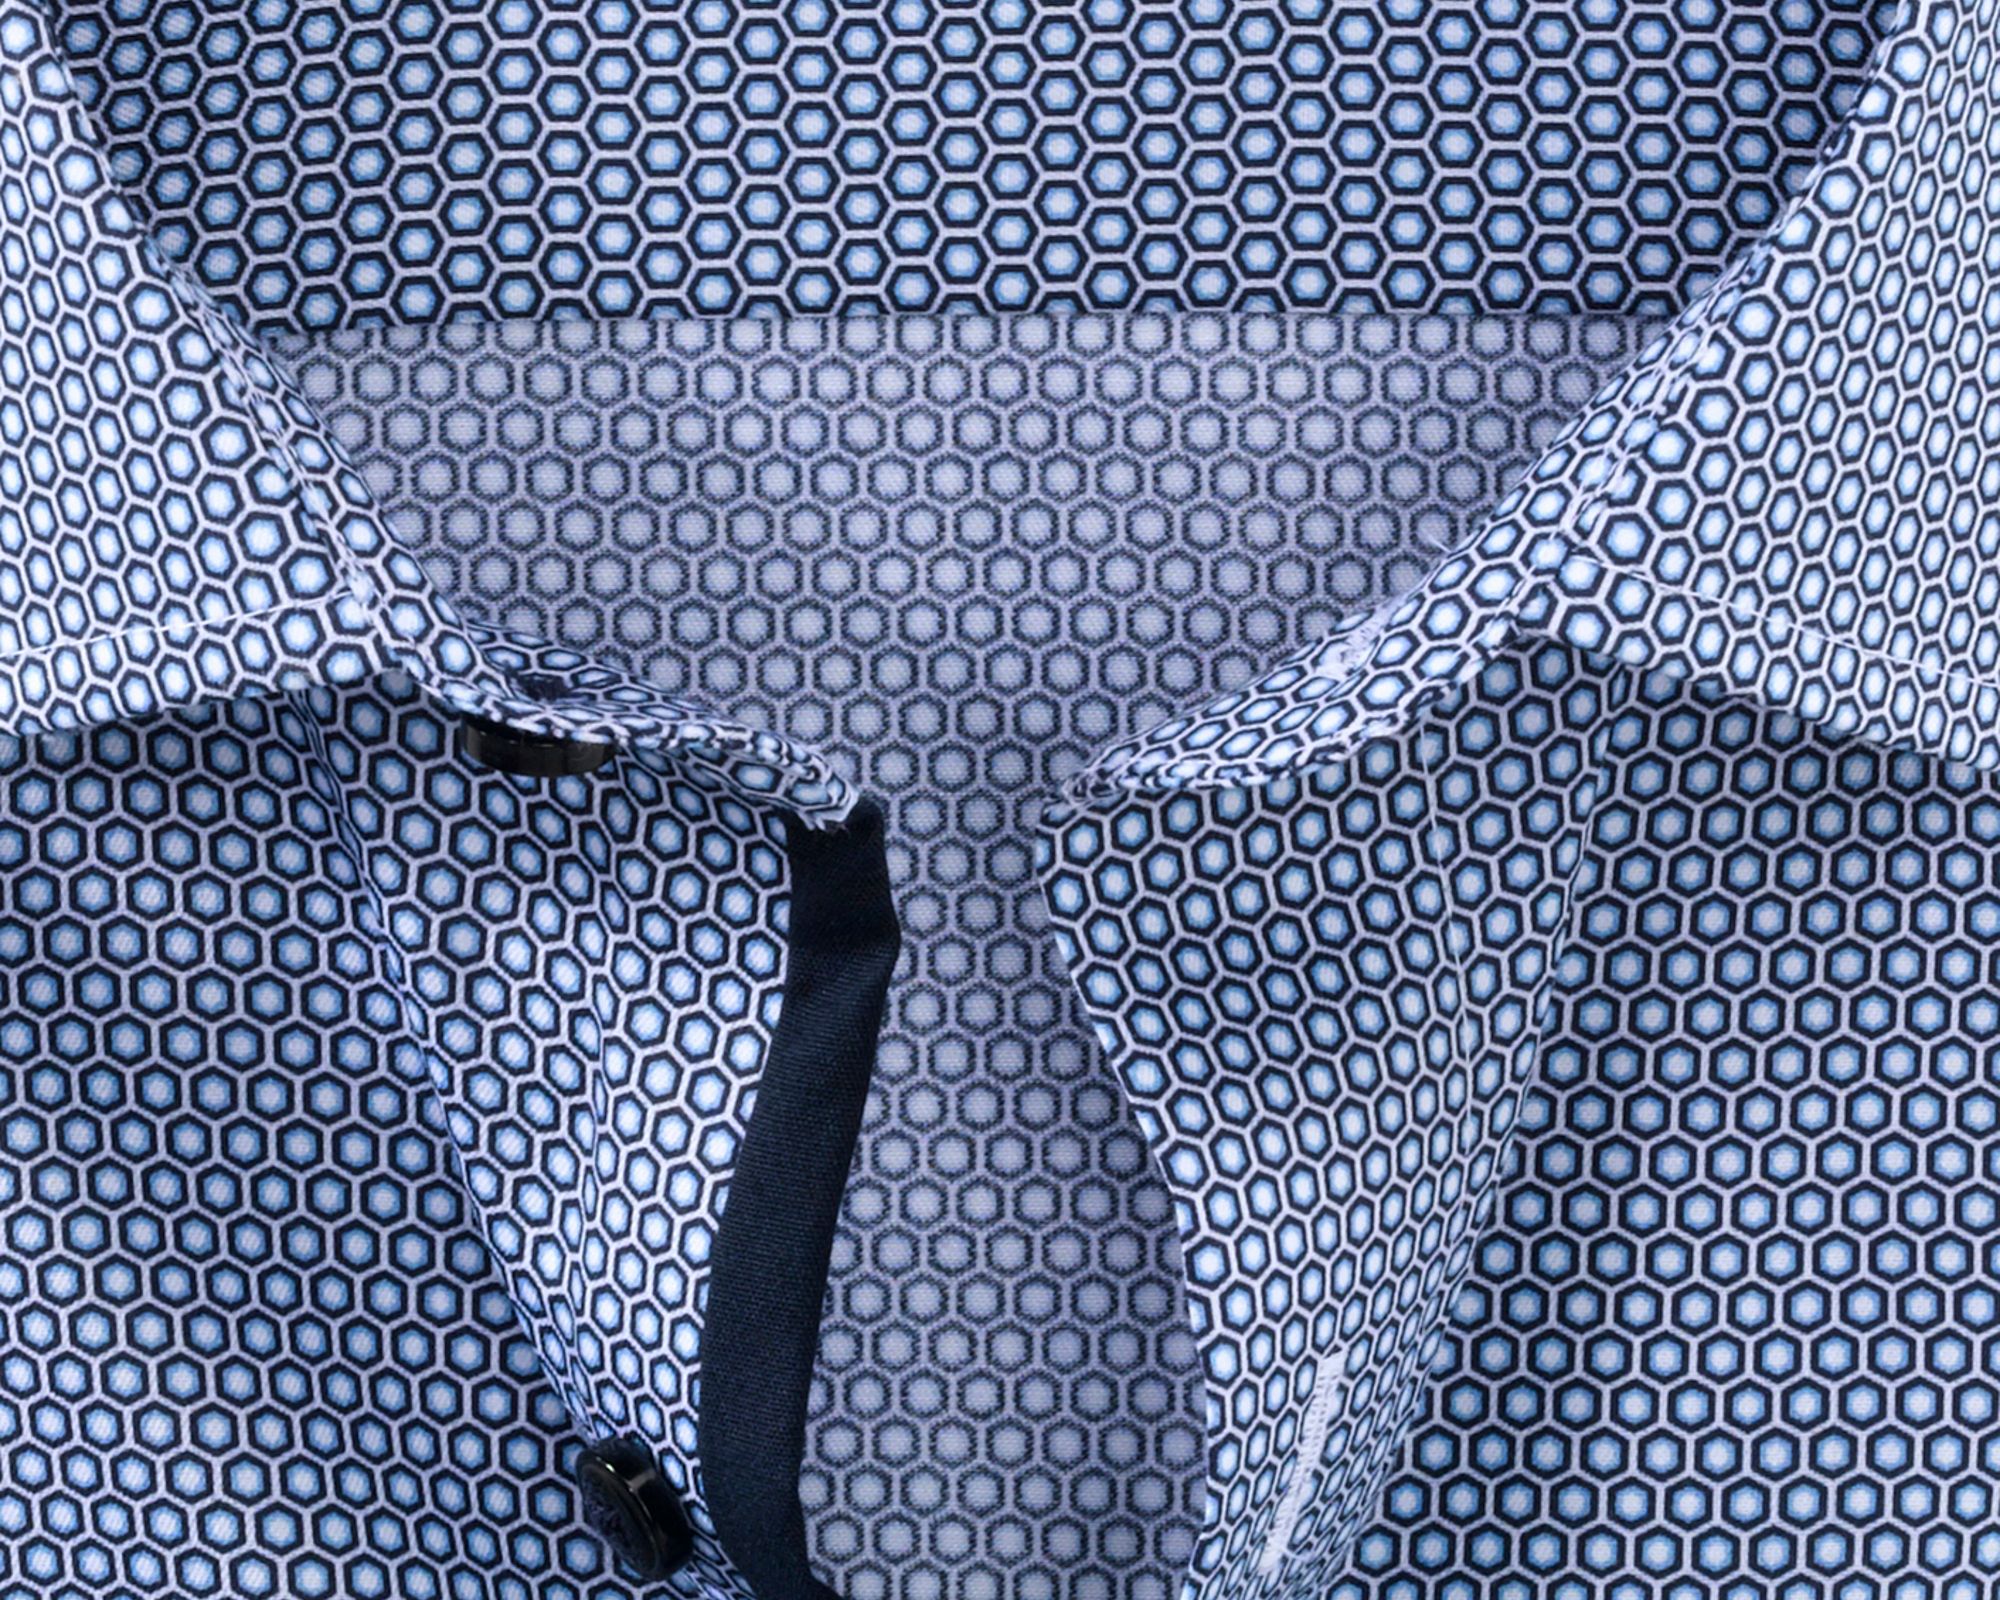 OLYMP Modern Fit Overhemd LM Blauw 080229-001-47